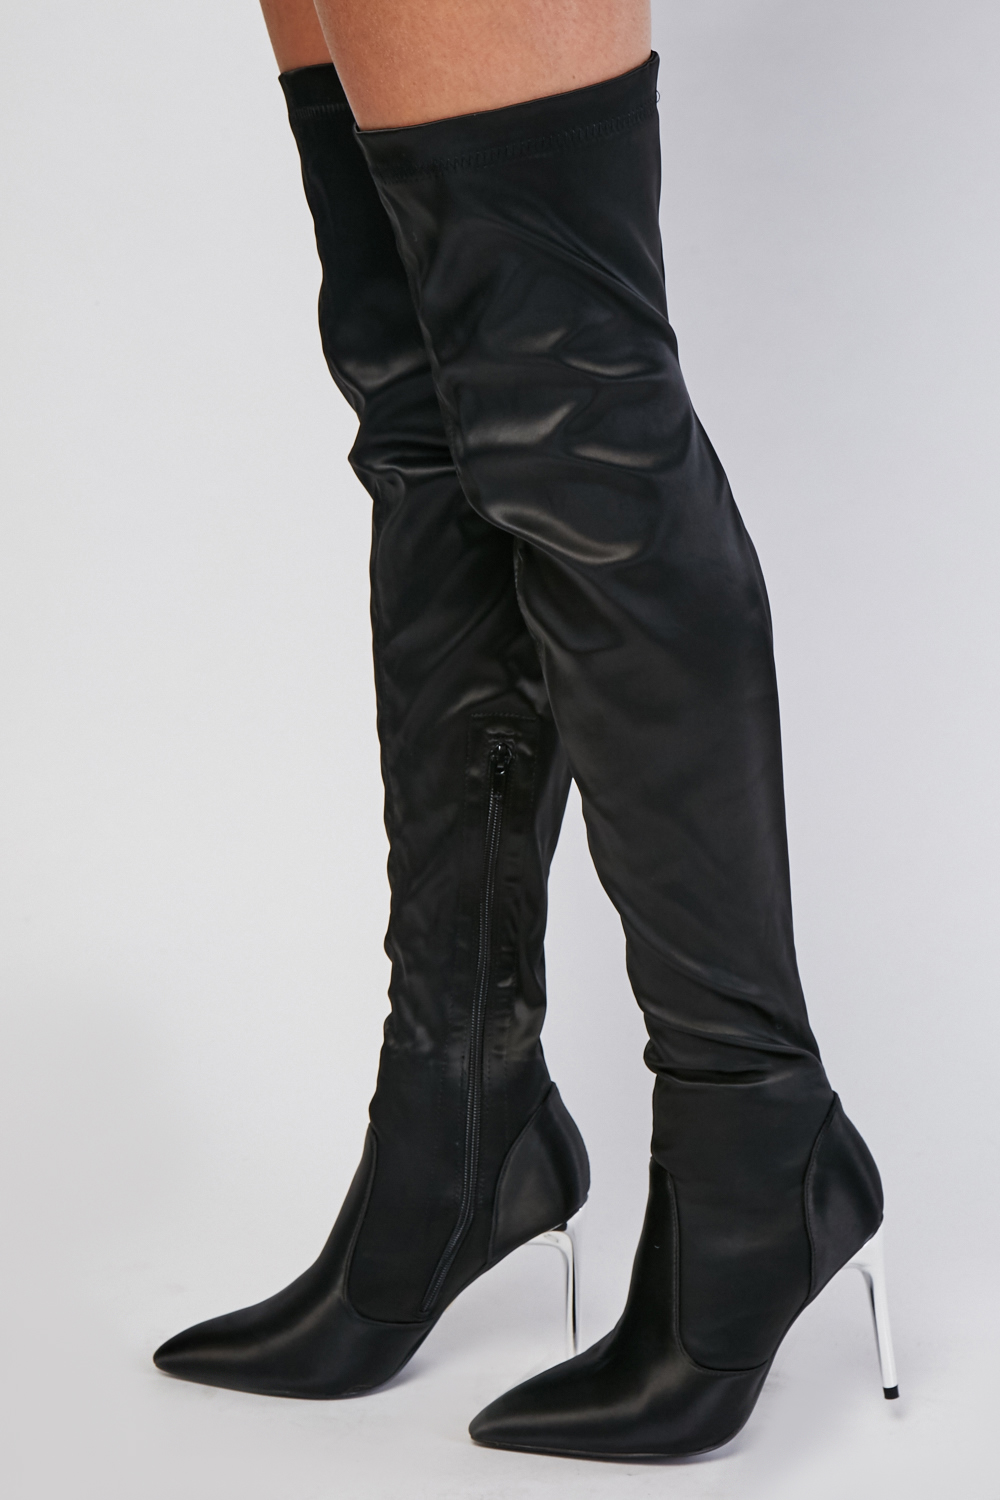 Black Thigh High Sateen Boots - Just $7